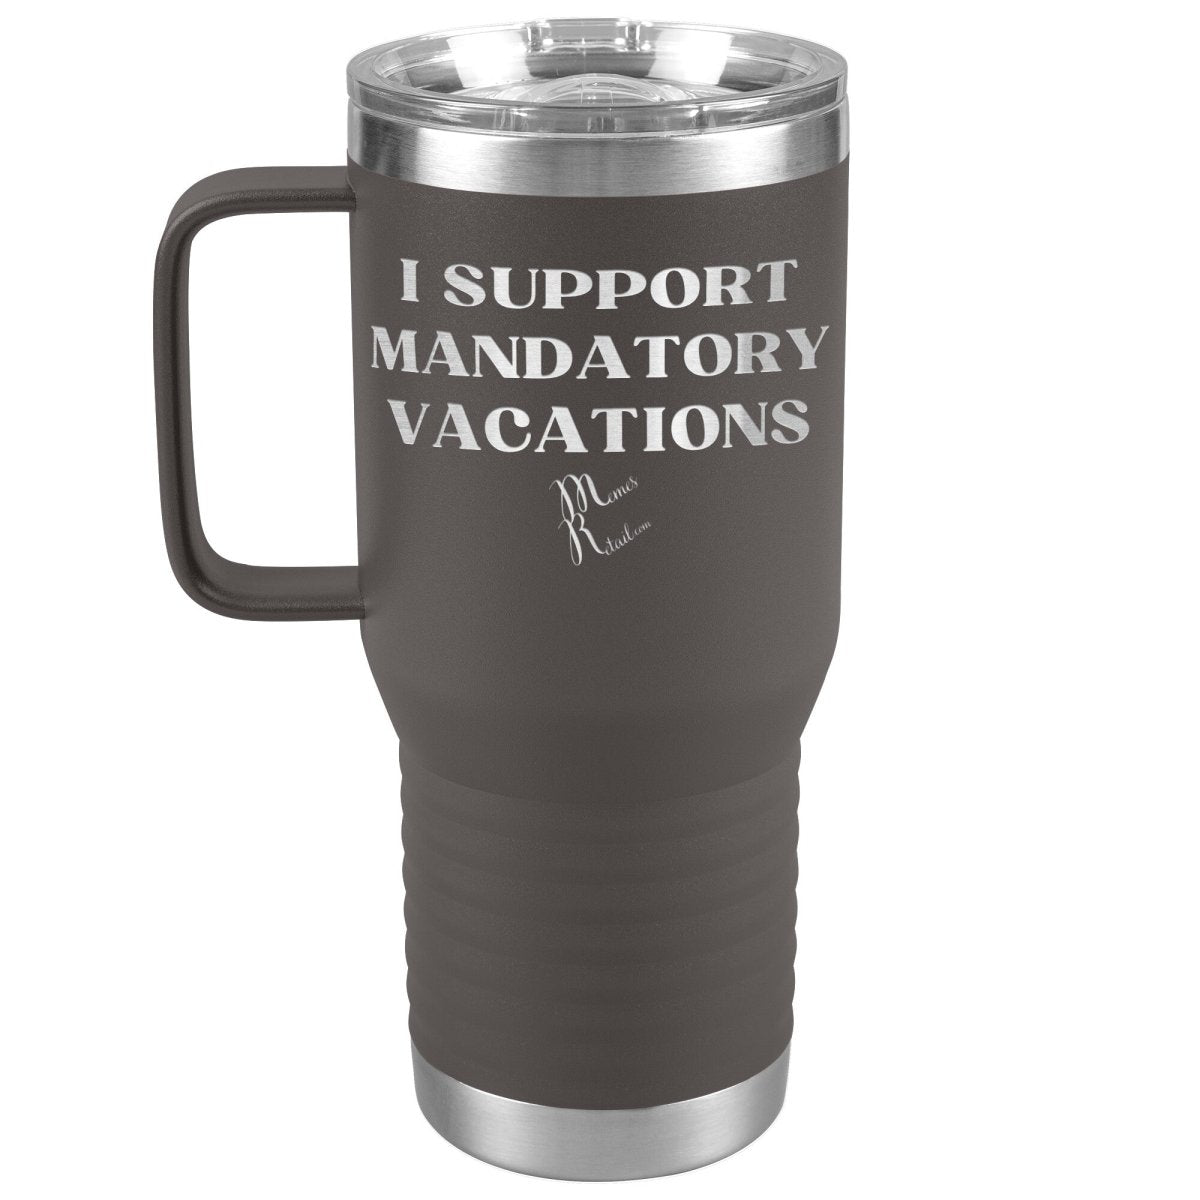 I support mandatory vacations Tumblers, 20oz Travel Tumbler / Pewter - MemesRetail.com